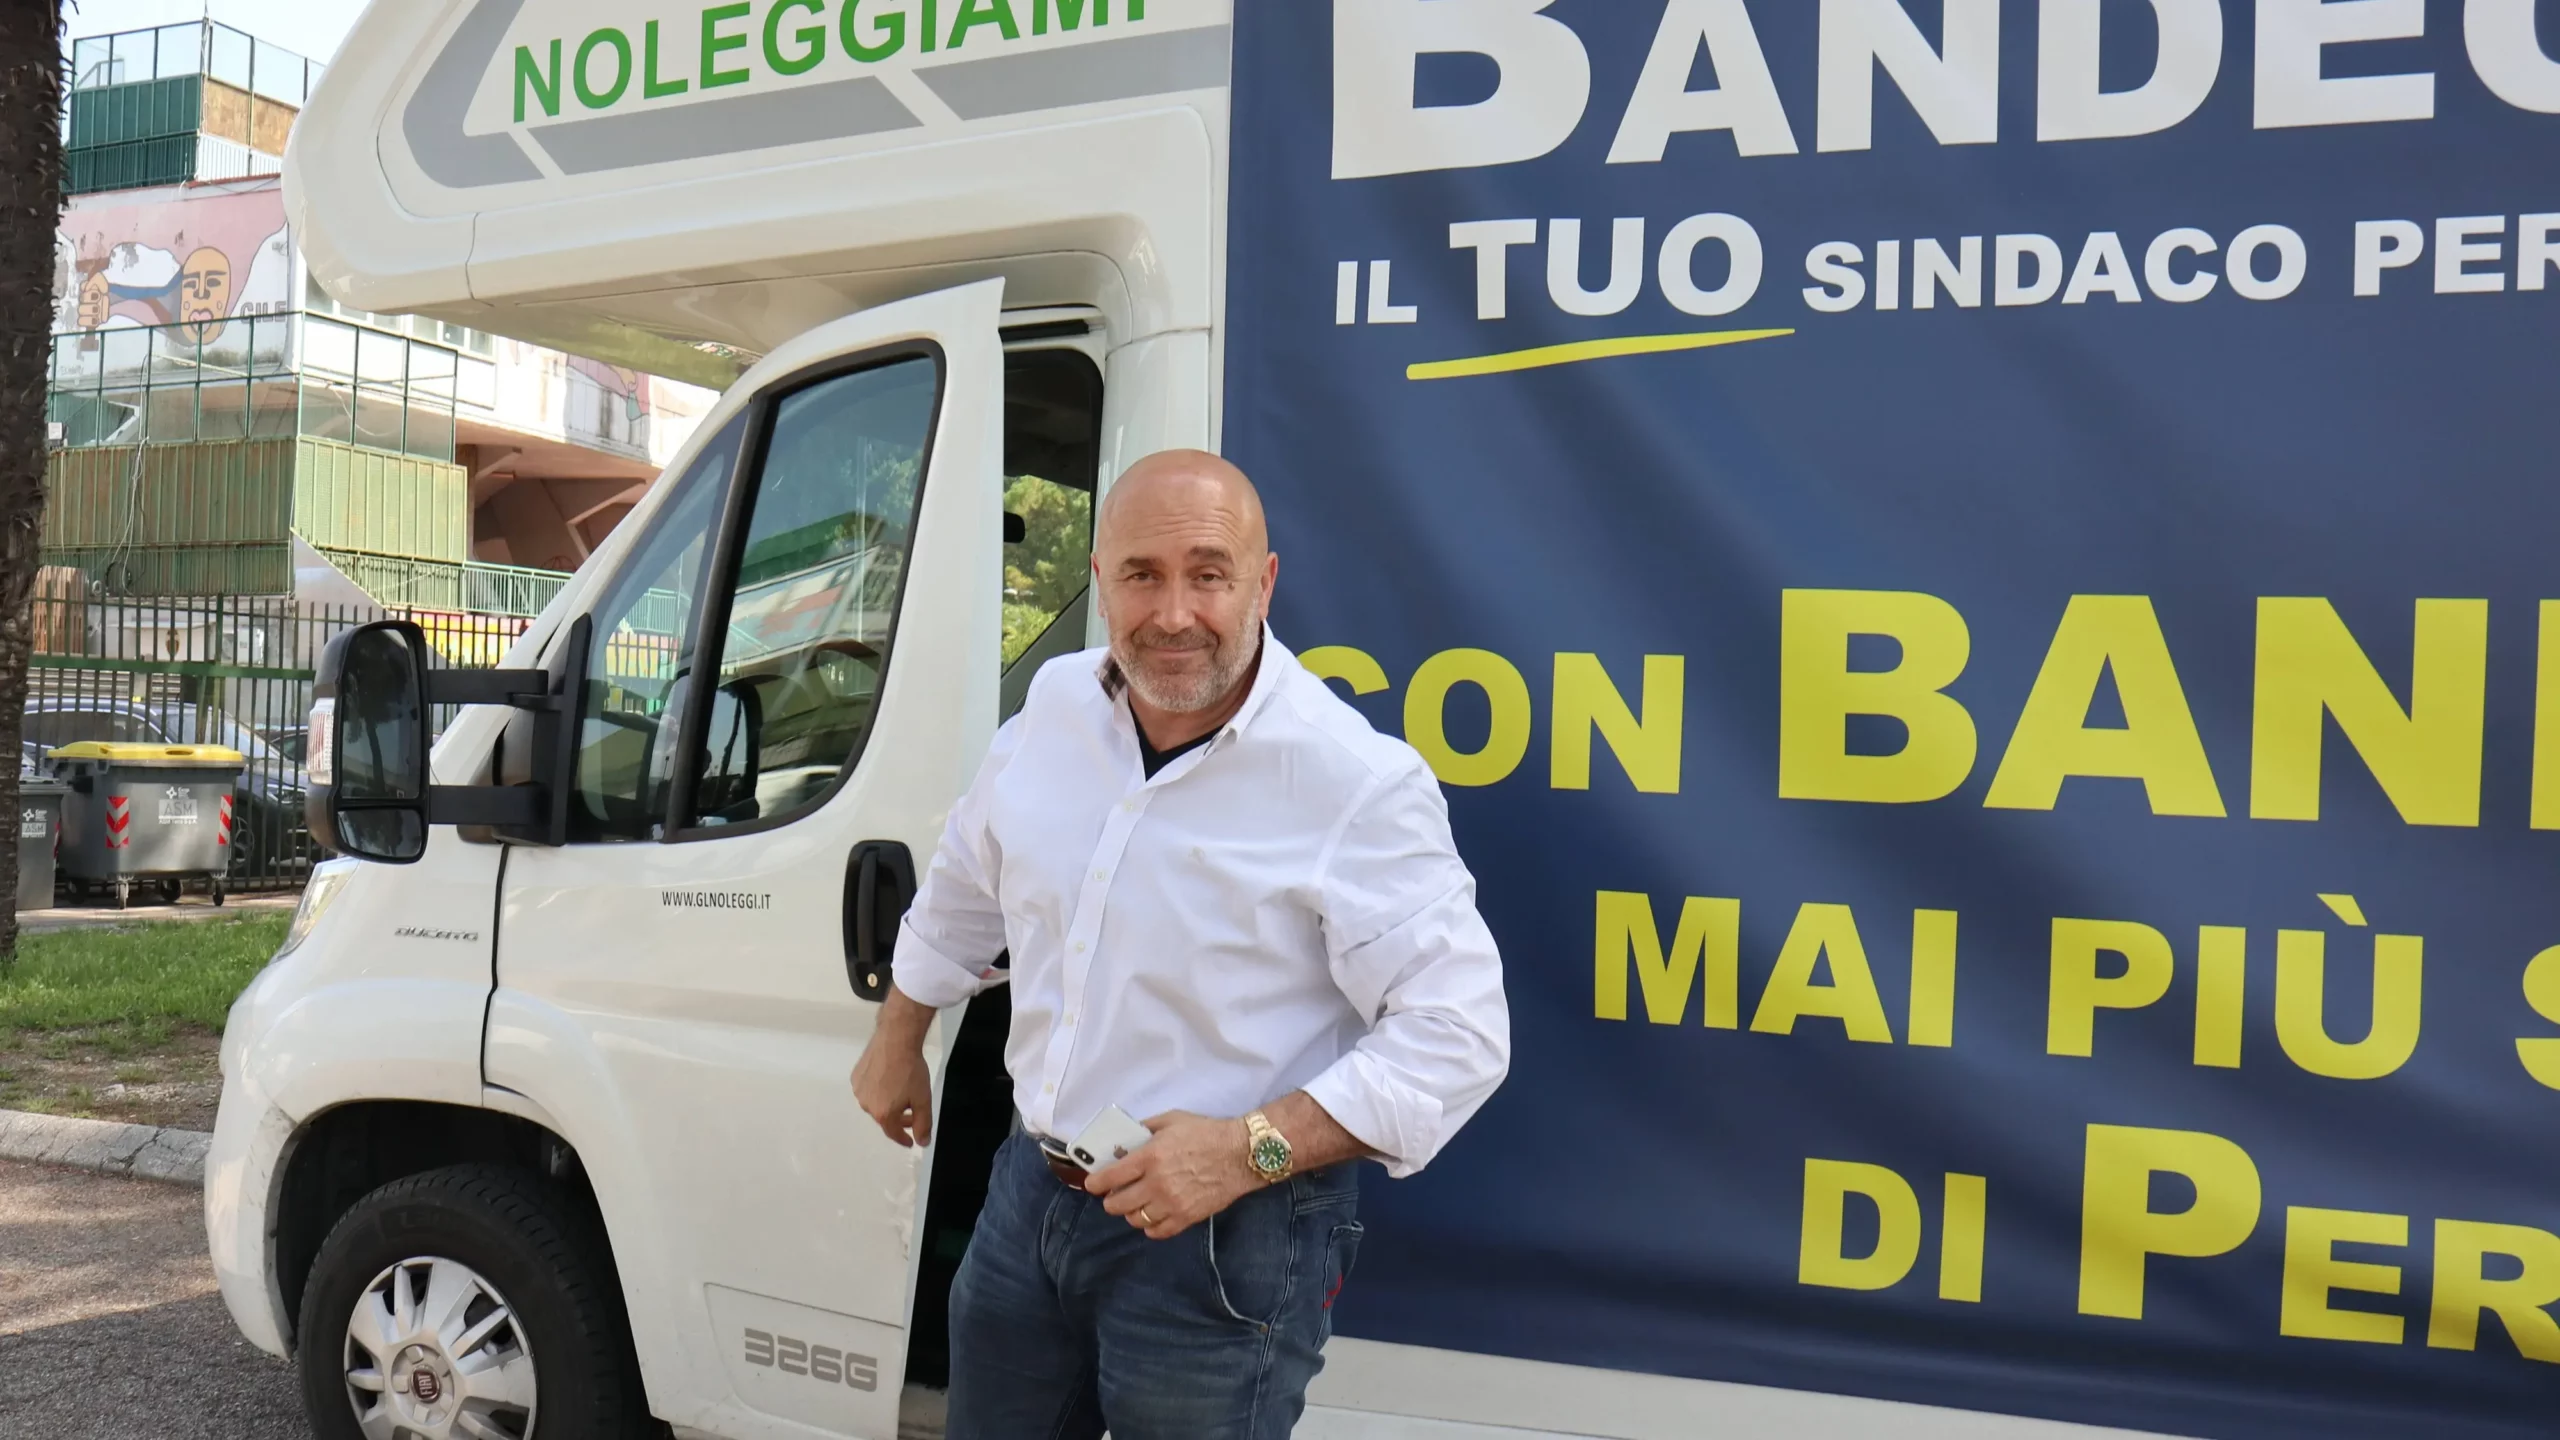 Stefano Bandecchi punta a Palazzo Chigi: "Guiderò Terni, poi l'Umbria e infine l'Italia"